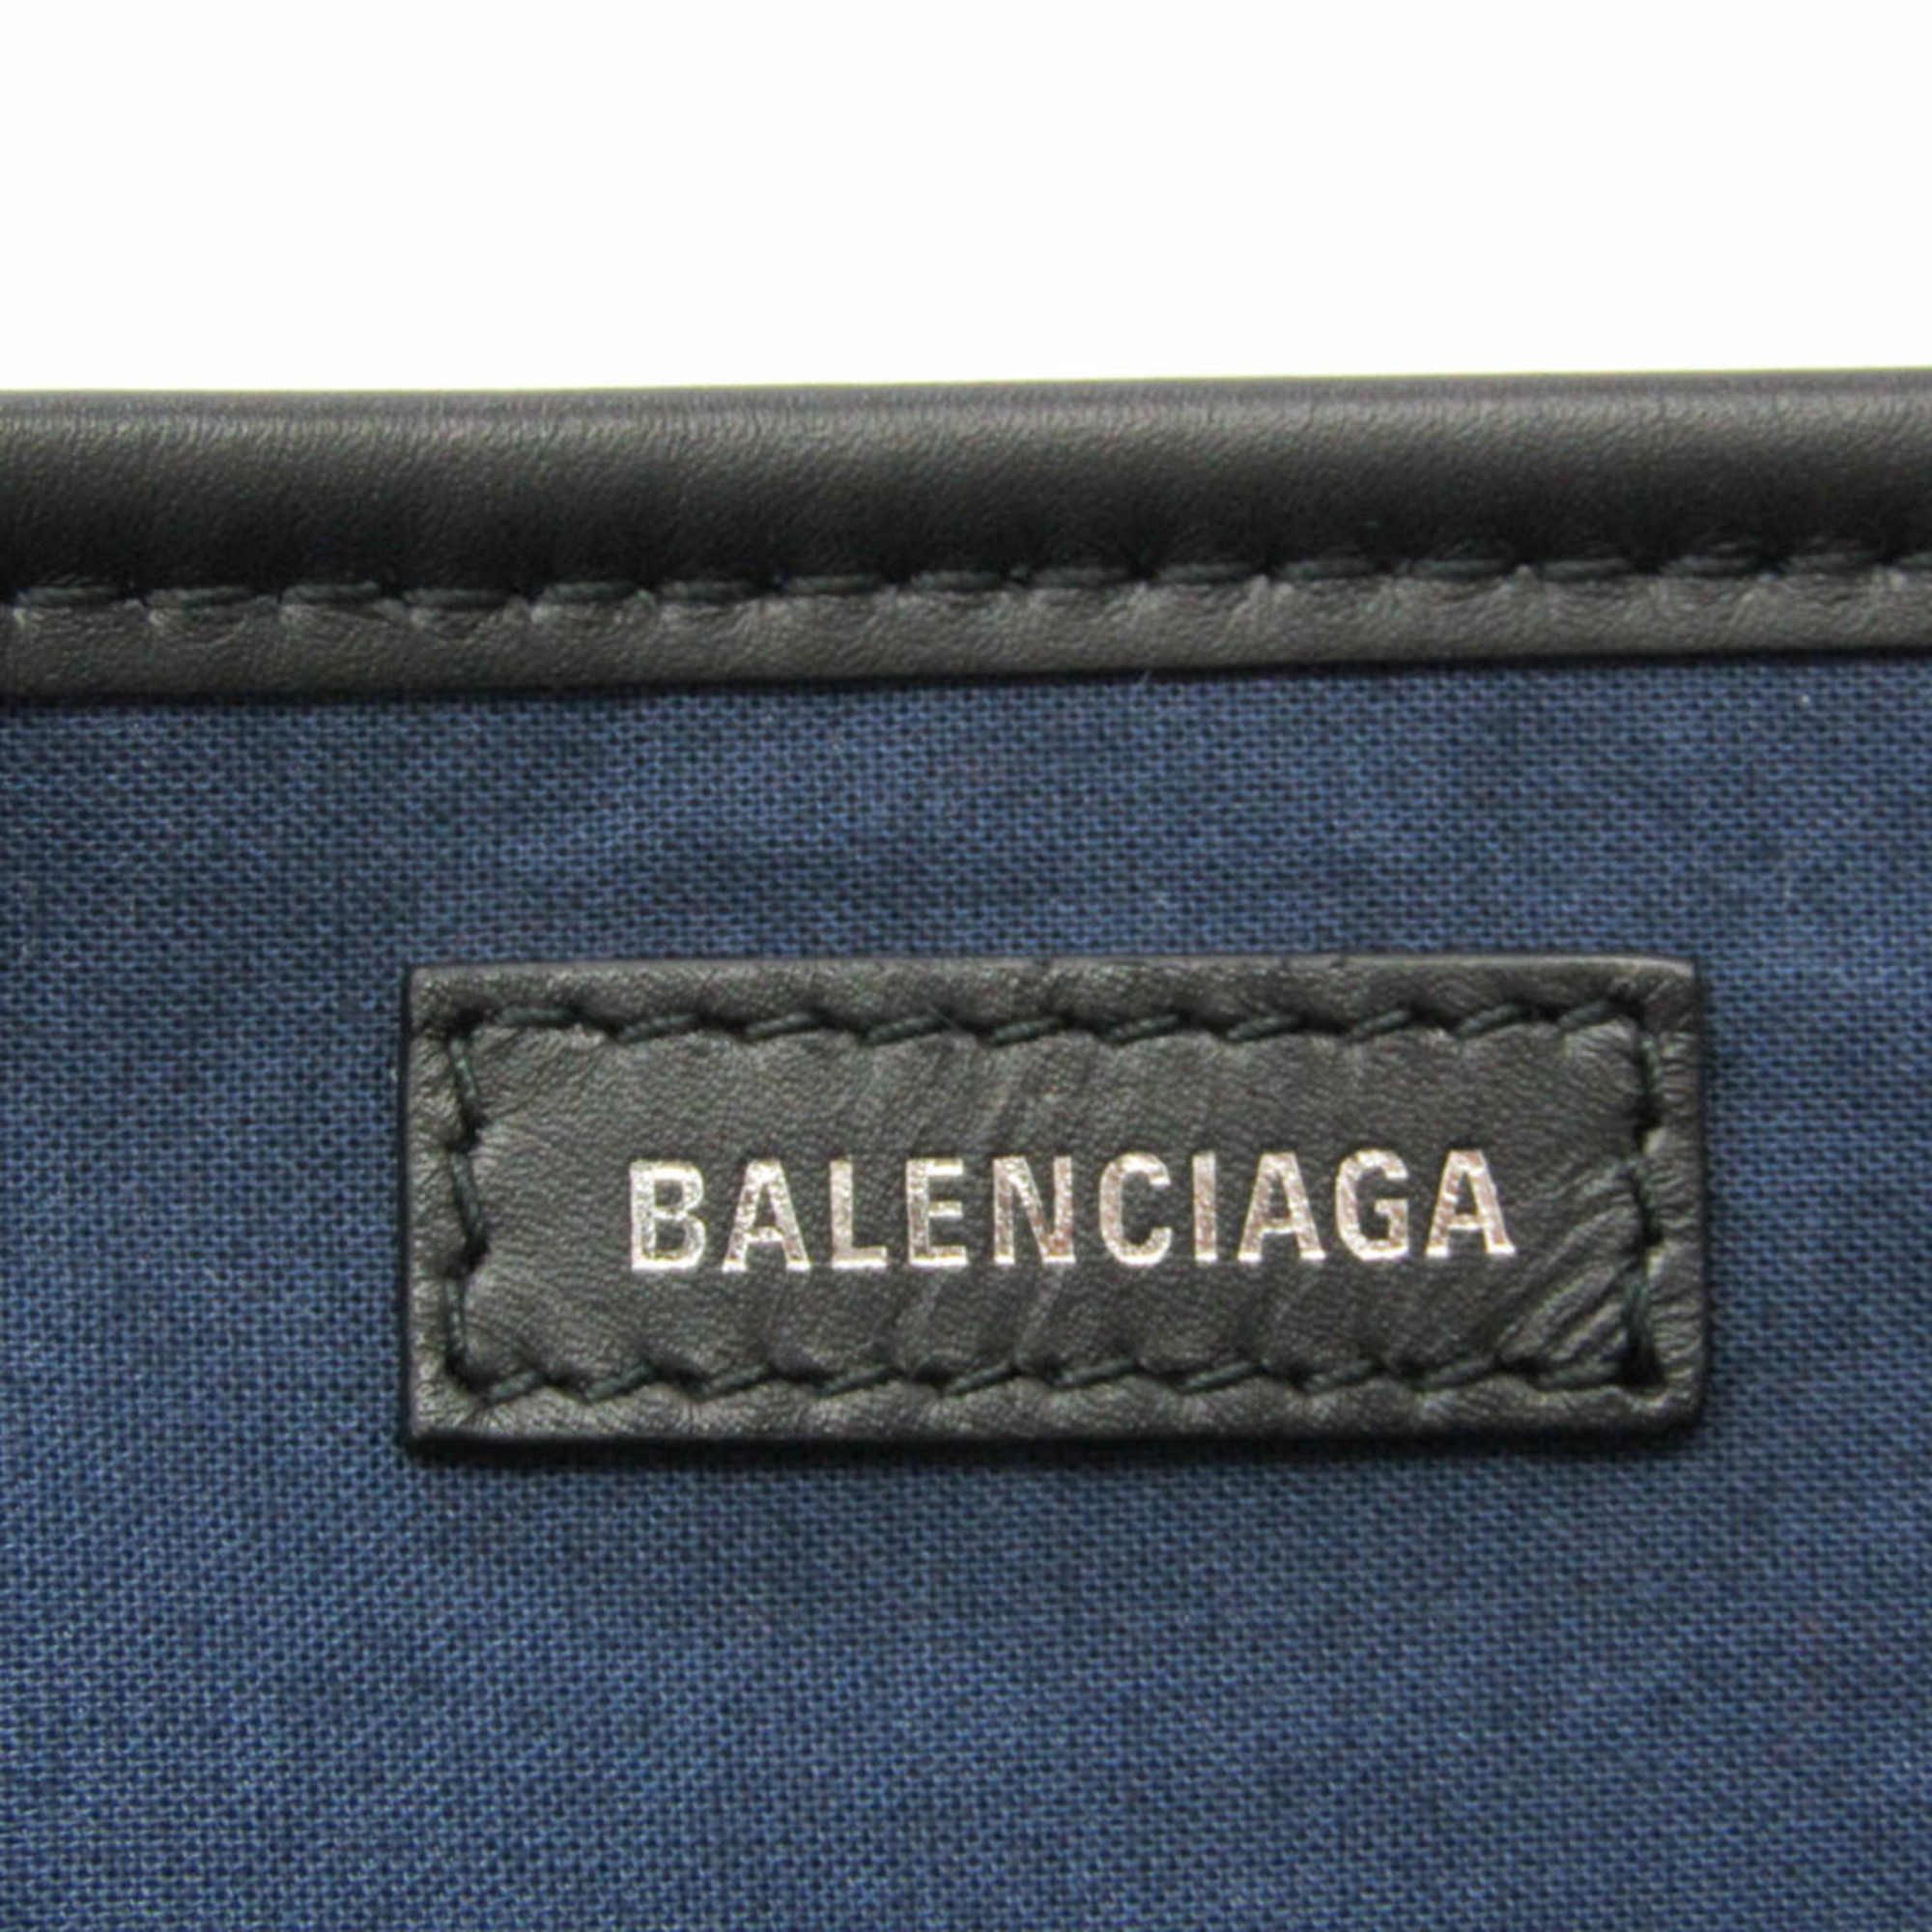 Balenciaga Navy Cabas S 339933 Women's Wool,Leather Handbag Black,Red Color